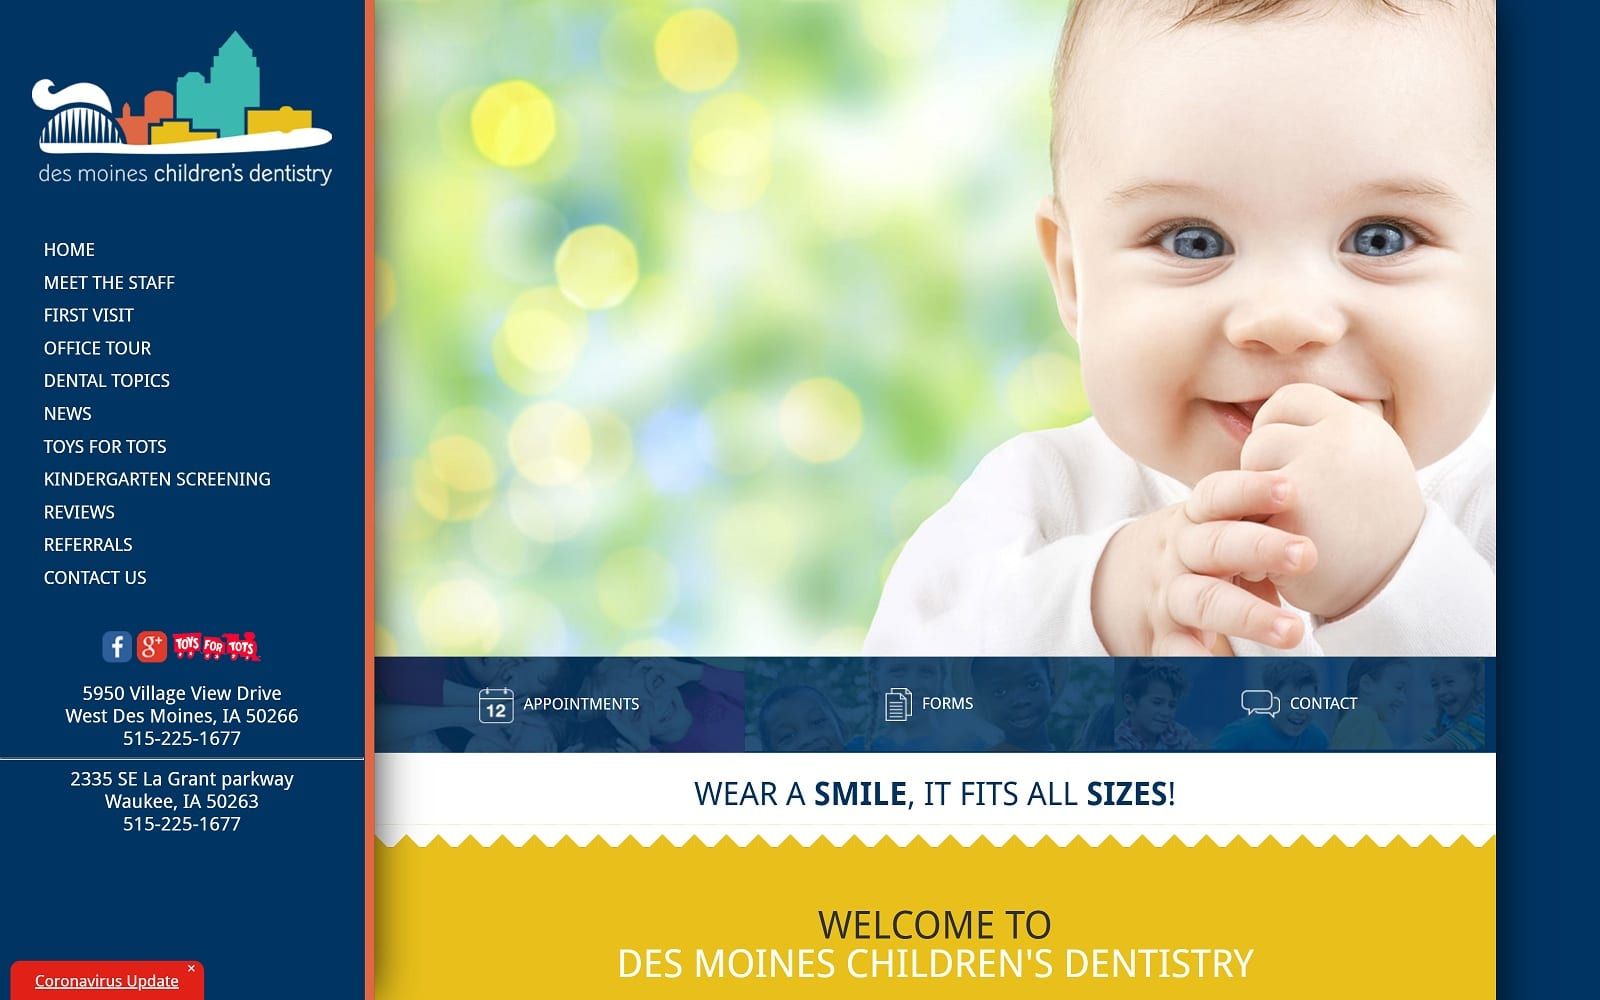 The screenshot of des moines children's dentistry dsmpd. Com website